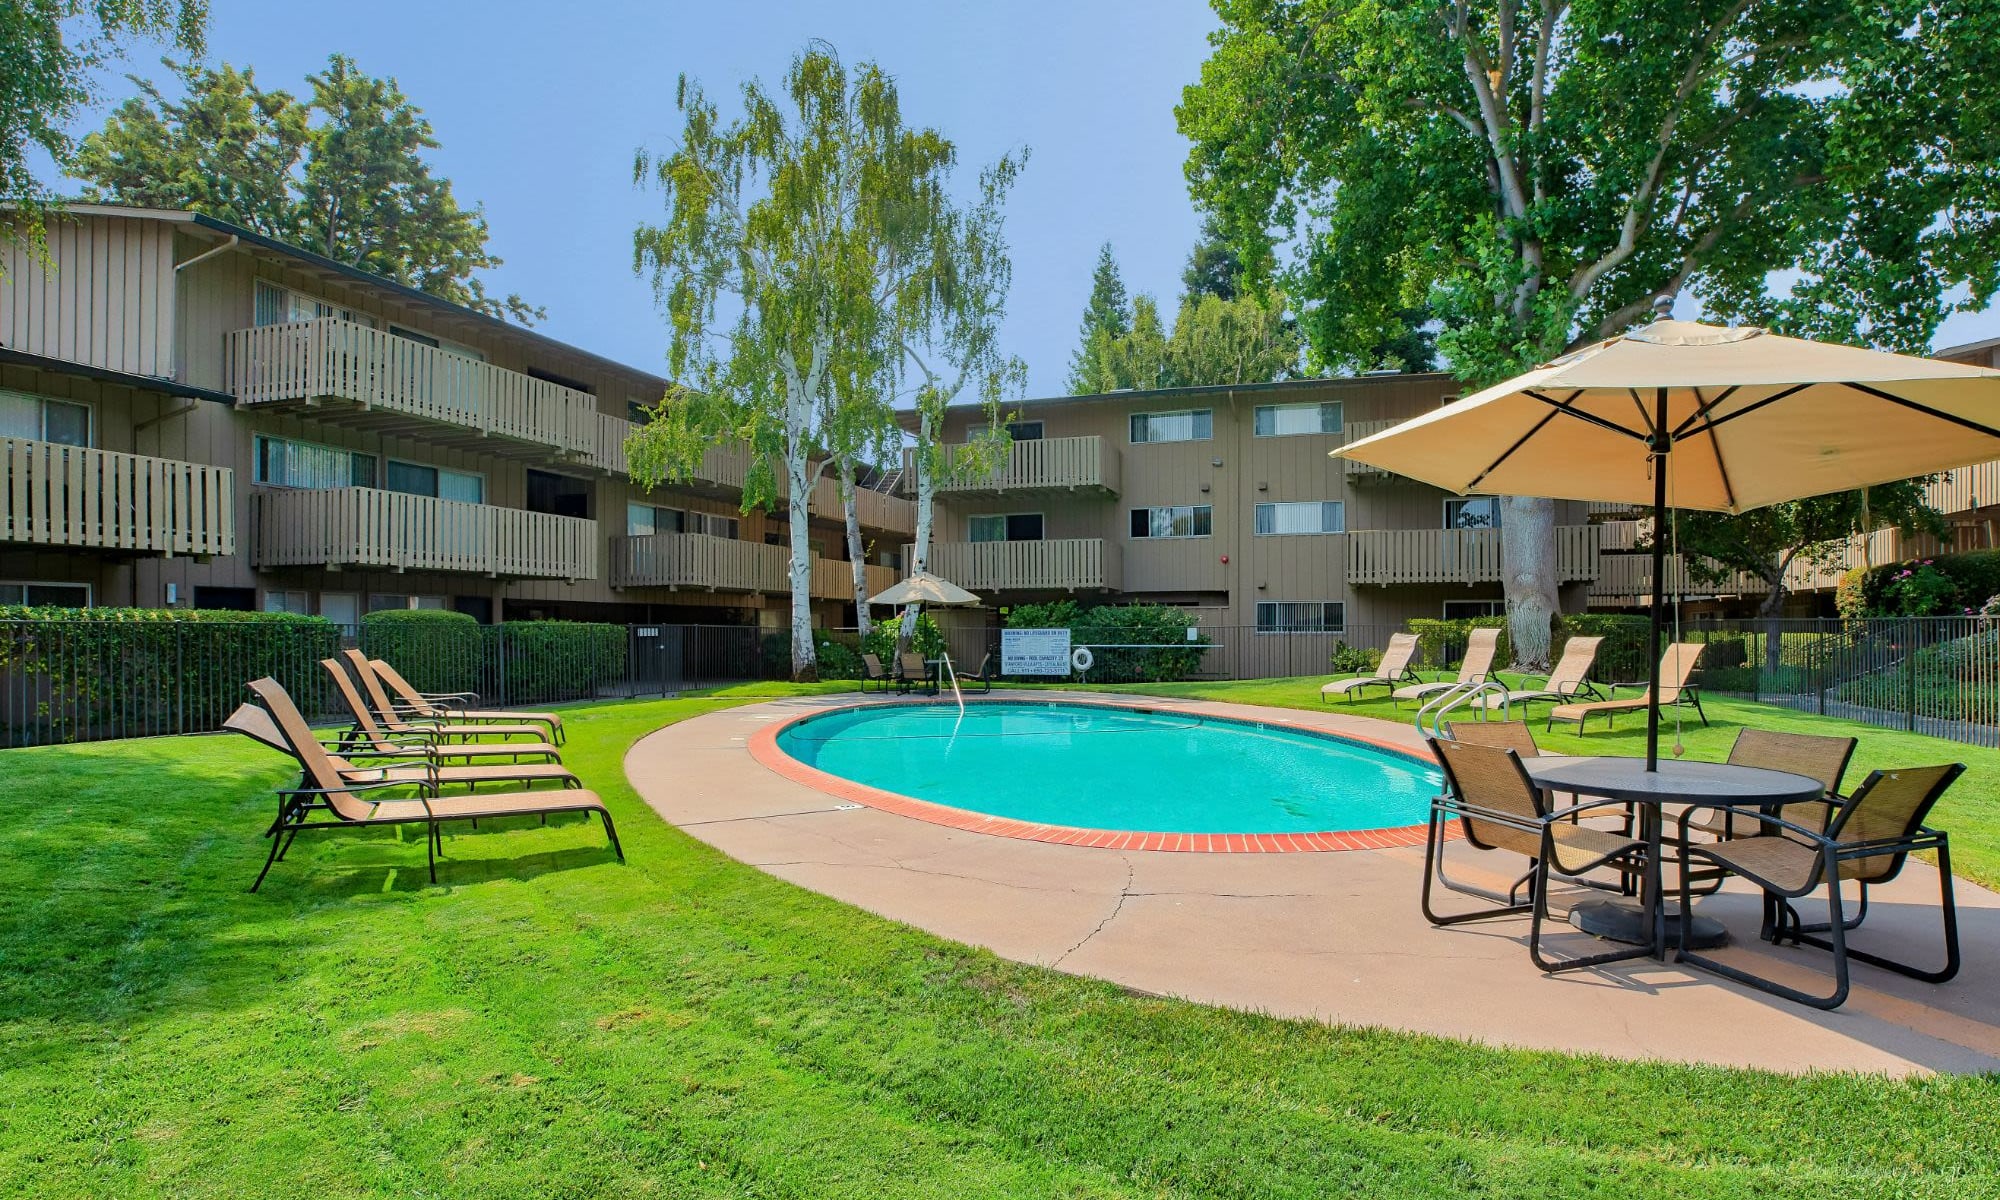 Pool area at Stanford Villa Apartment Homes in Palo Alto, California